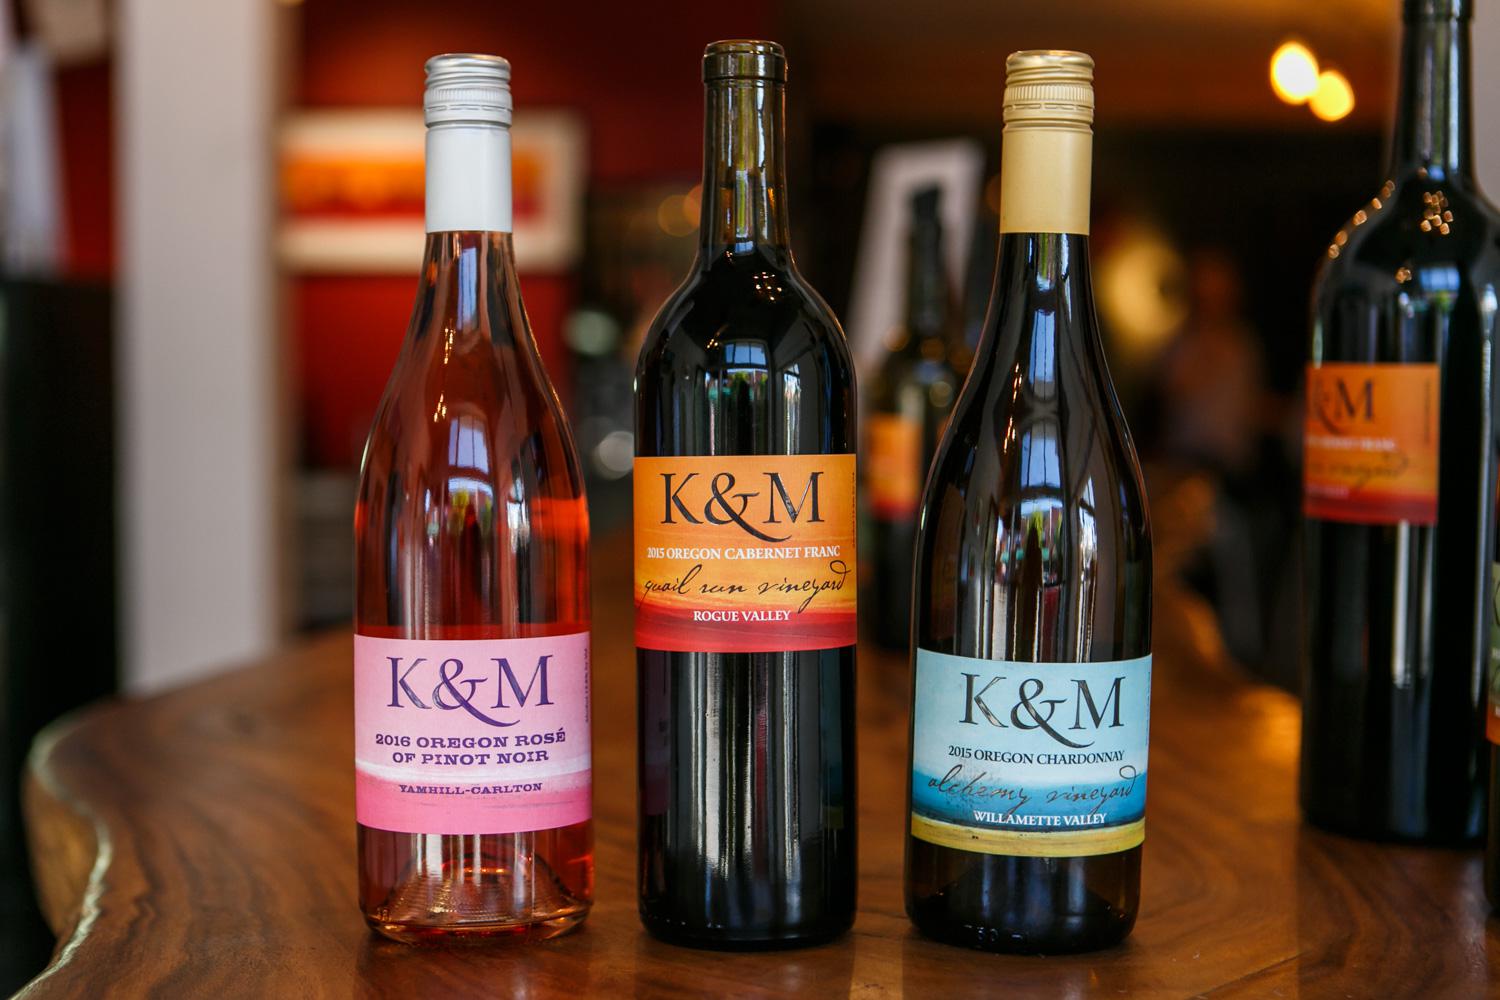 Image for K&M Wines, Alchemy Vineyard